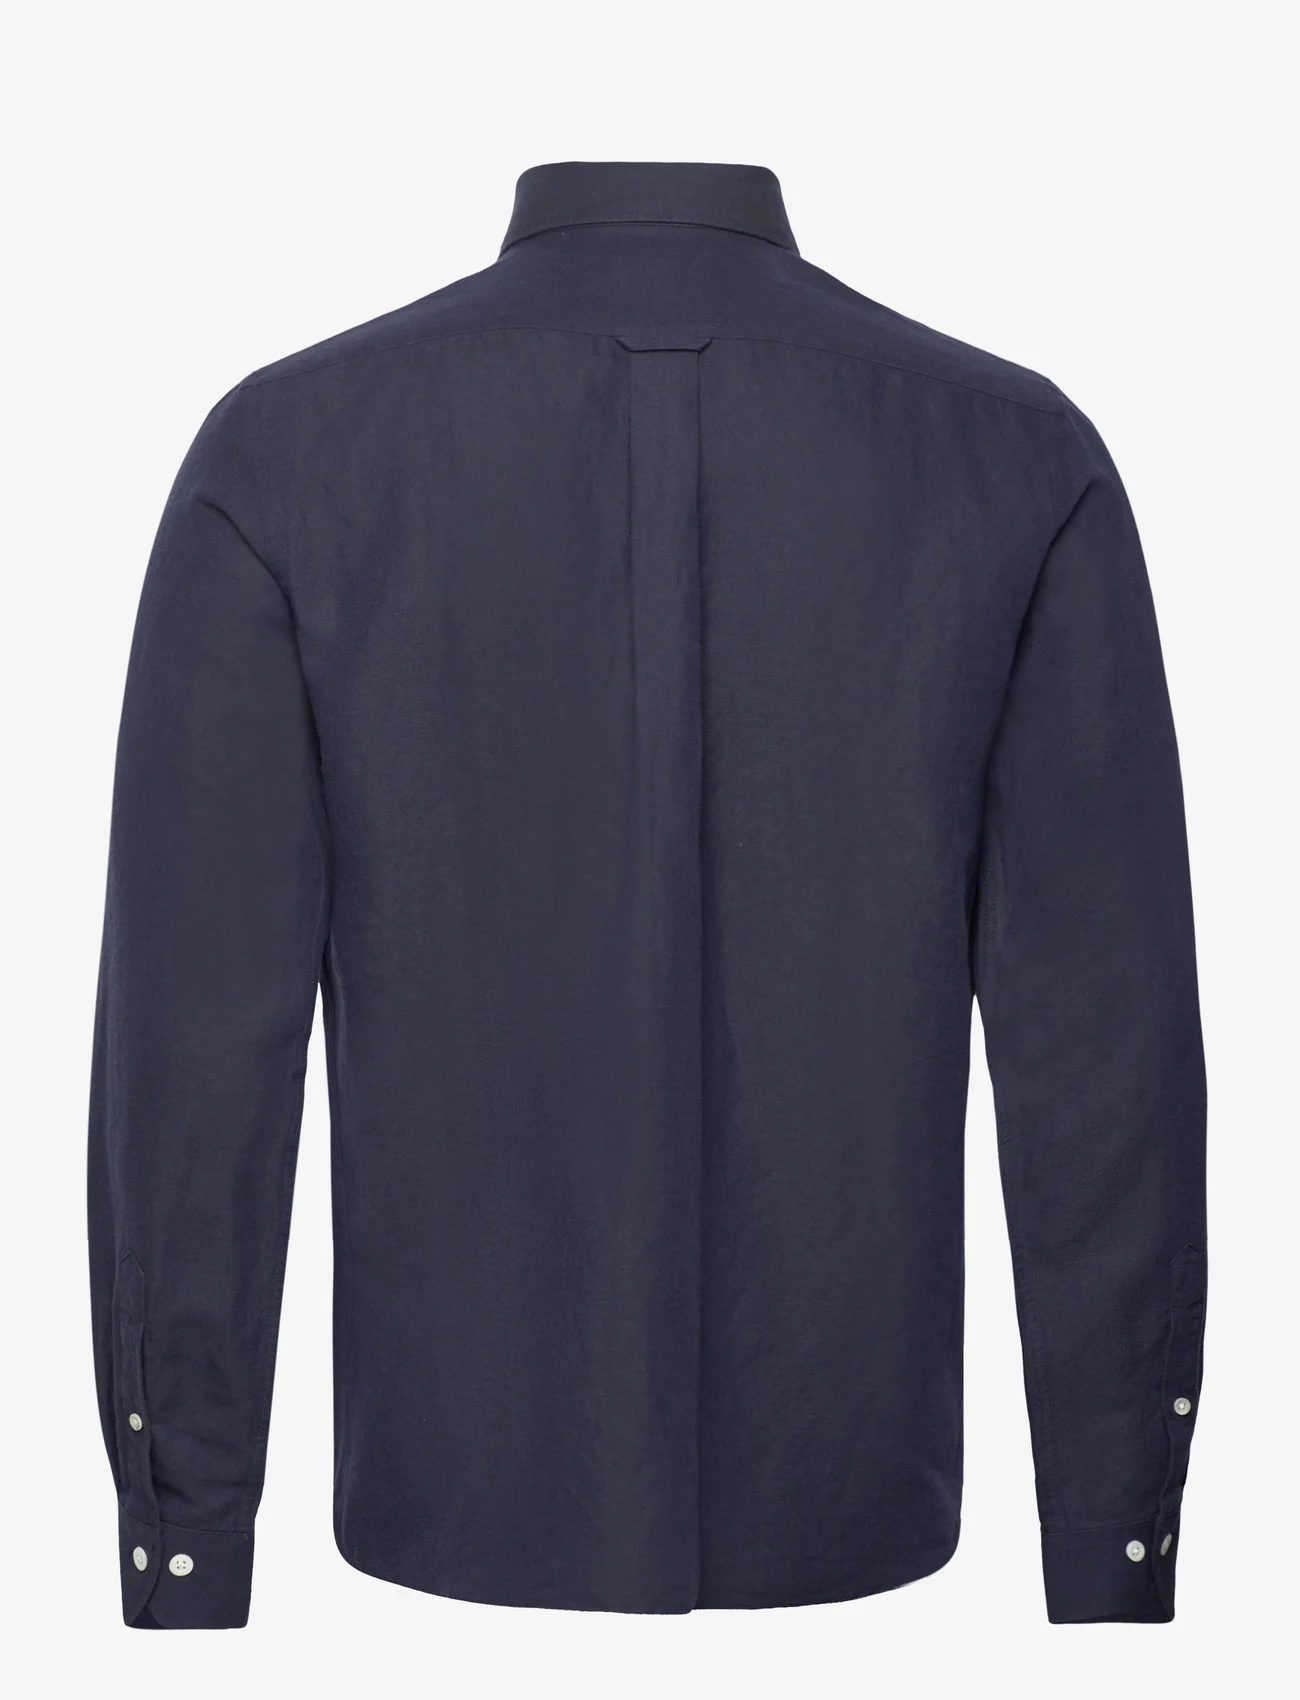 SIR of Sweden - Jerry Pocket Shirt - casual skjorter - navy - 1